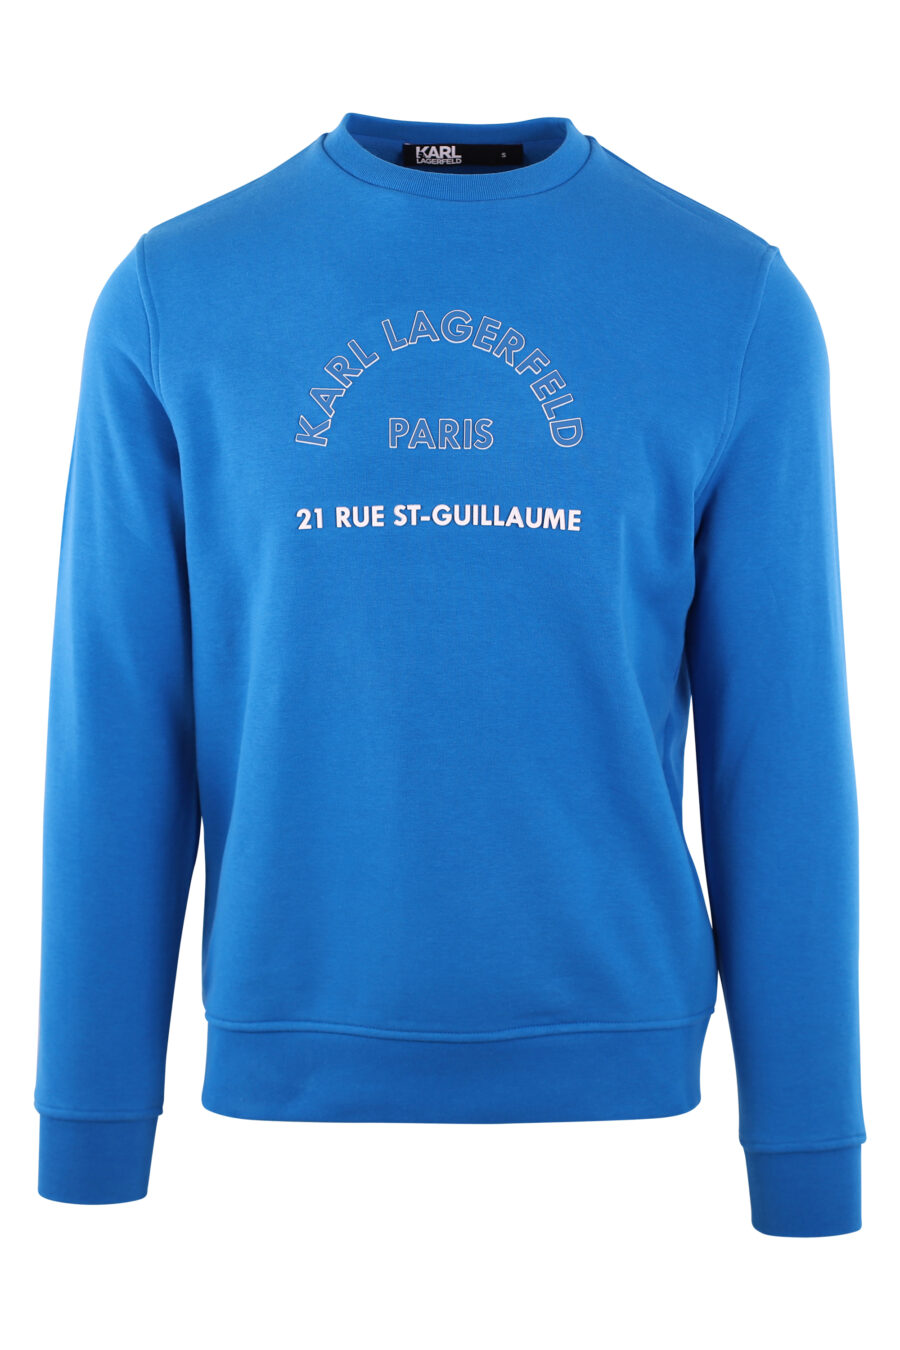 Sudadera azul con logo "rue st-guillaume" - IMG 2840